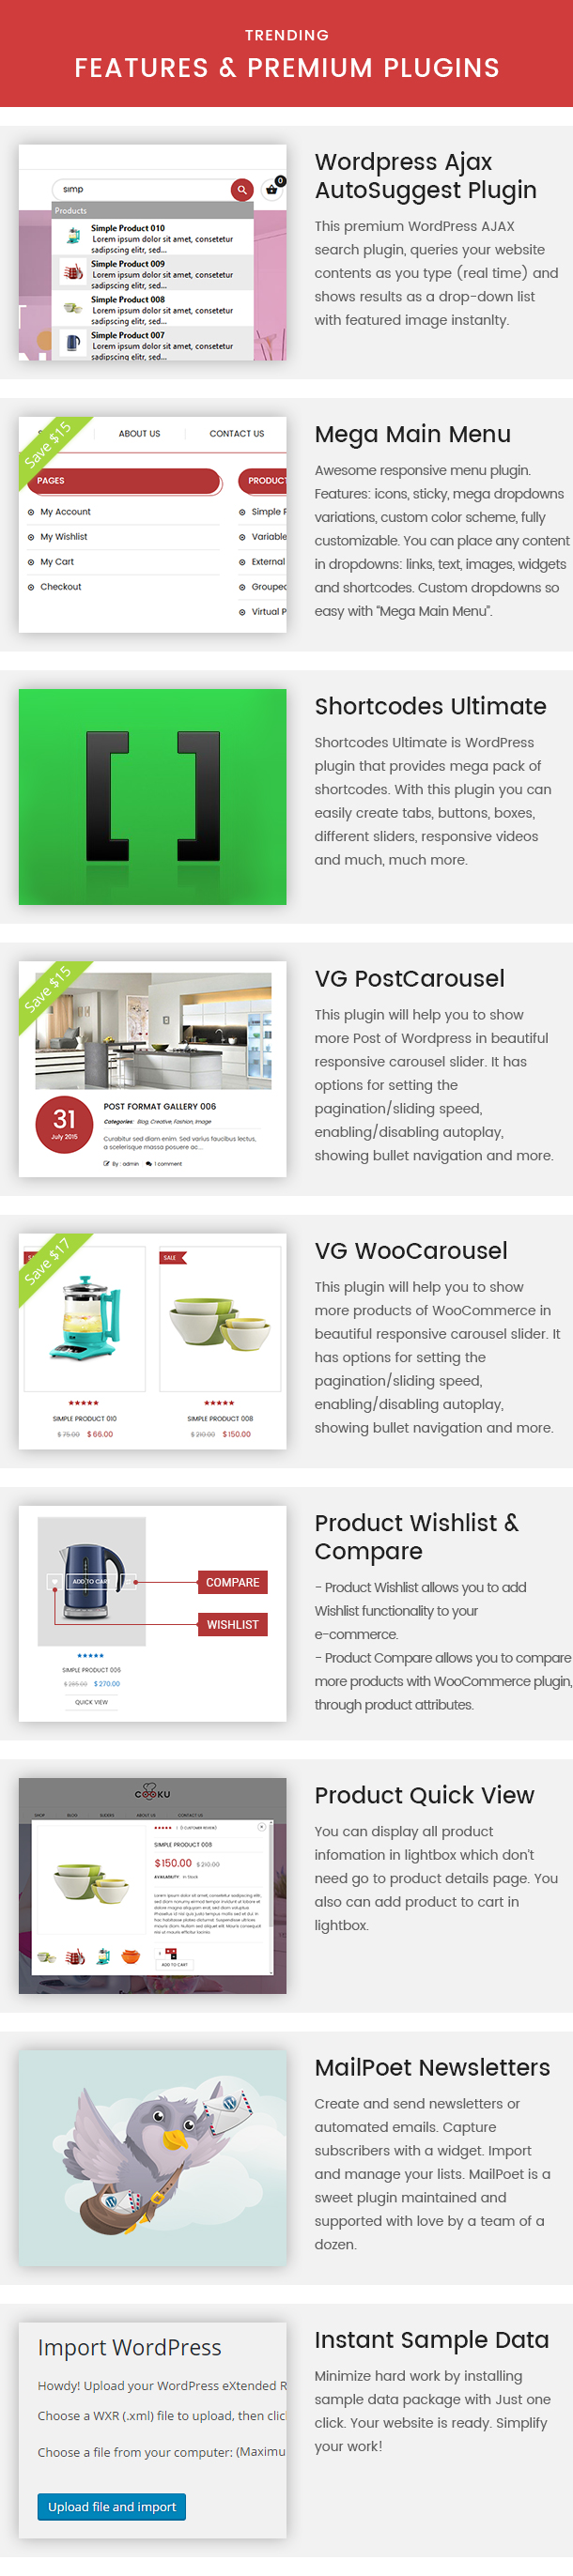 VG Cooku - Clean, Simple WooCommerce WordPress Theme - 29